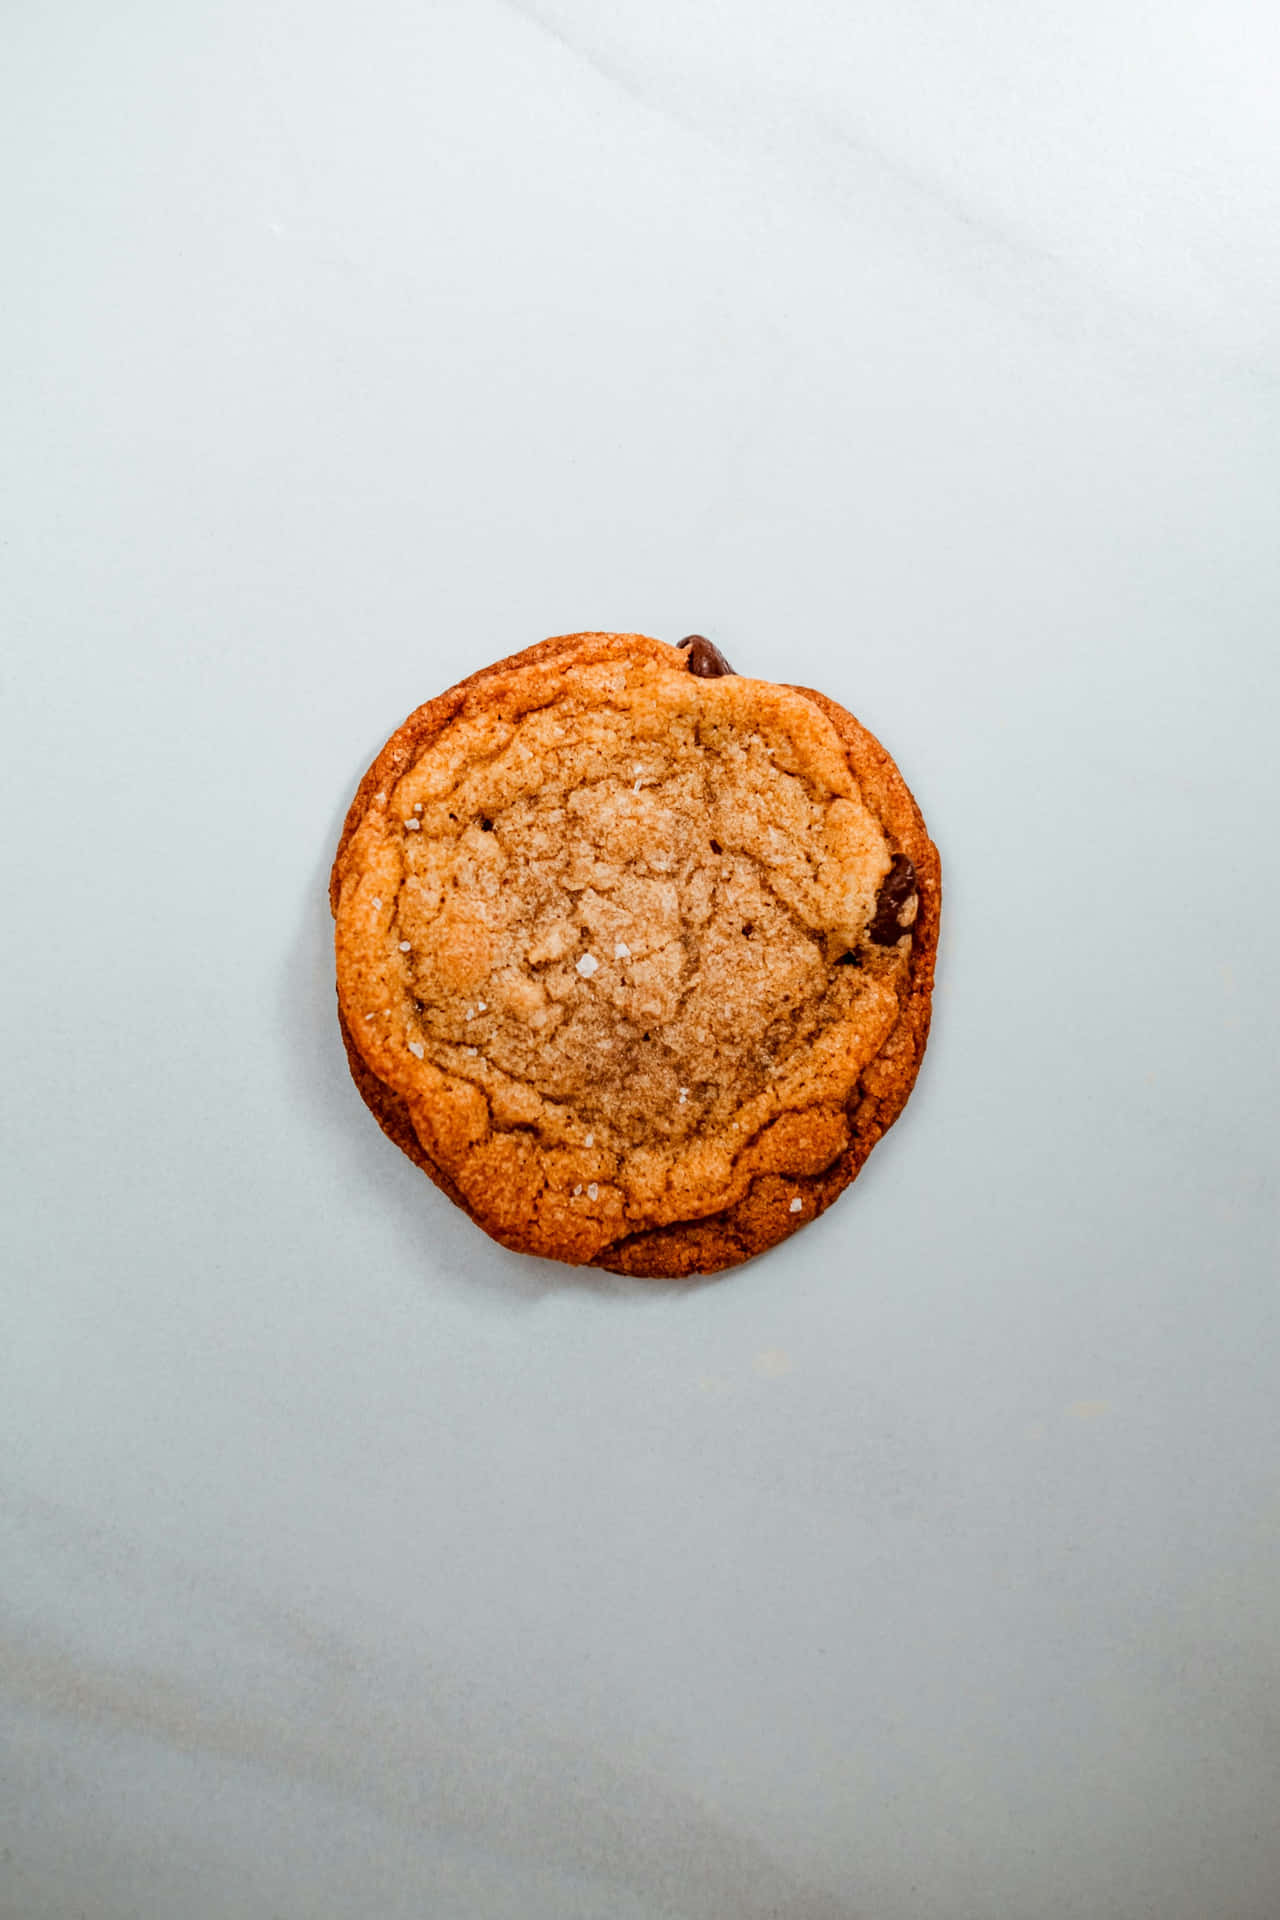 Single Chocolate Chip Cookieon Plain Background.jpg Wallpaper